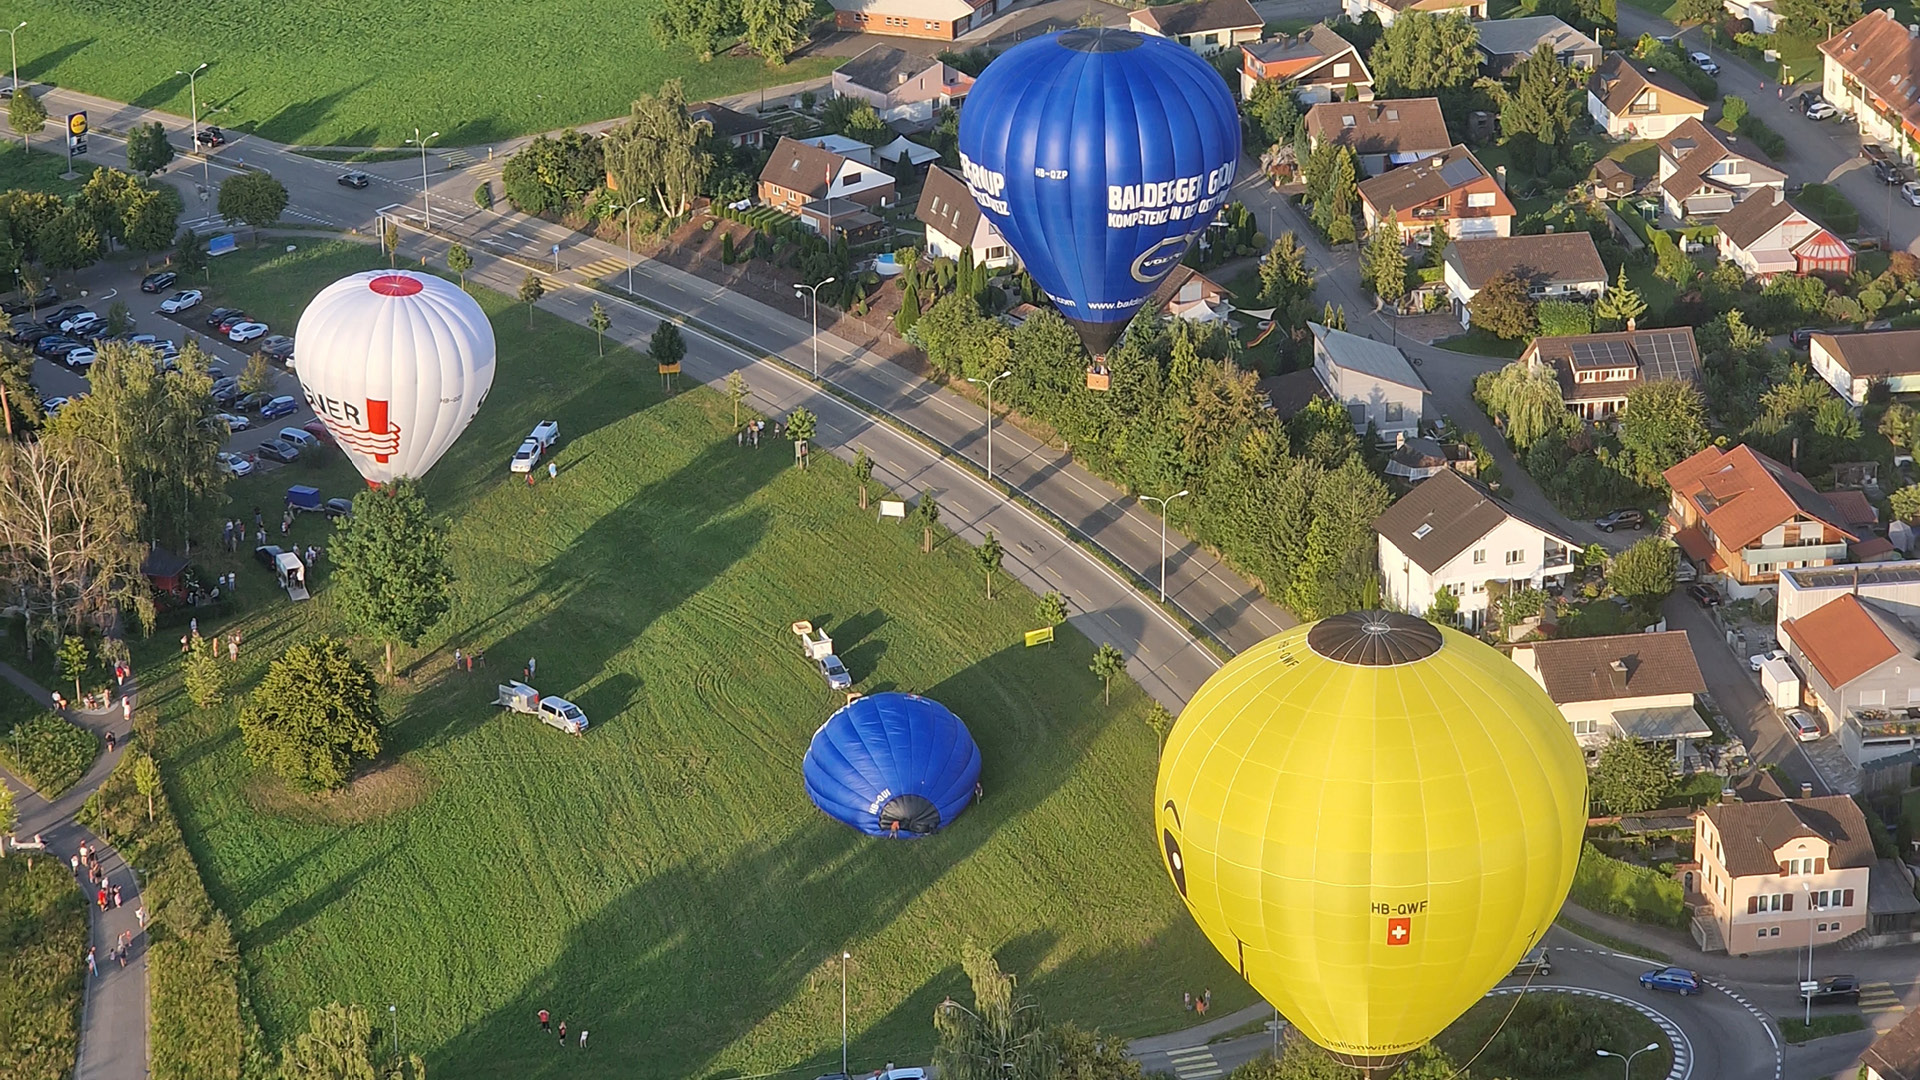 Ballon-Woche in Uzwil